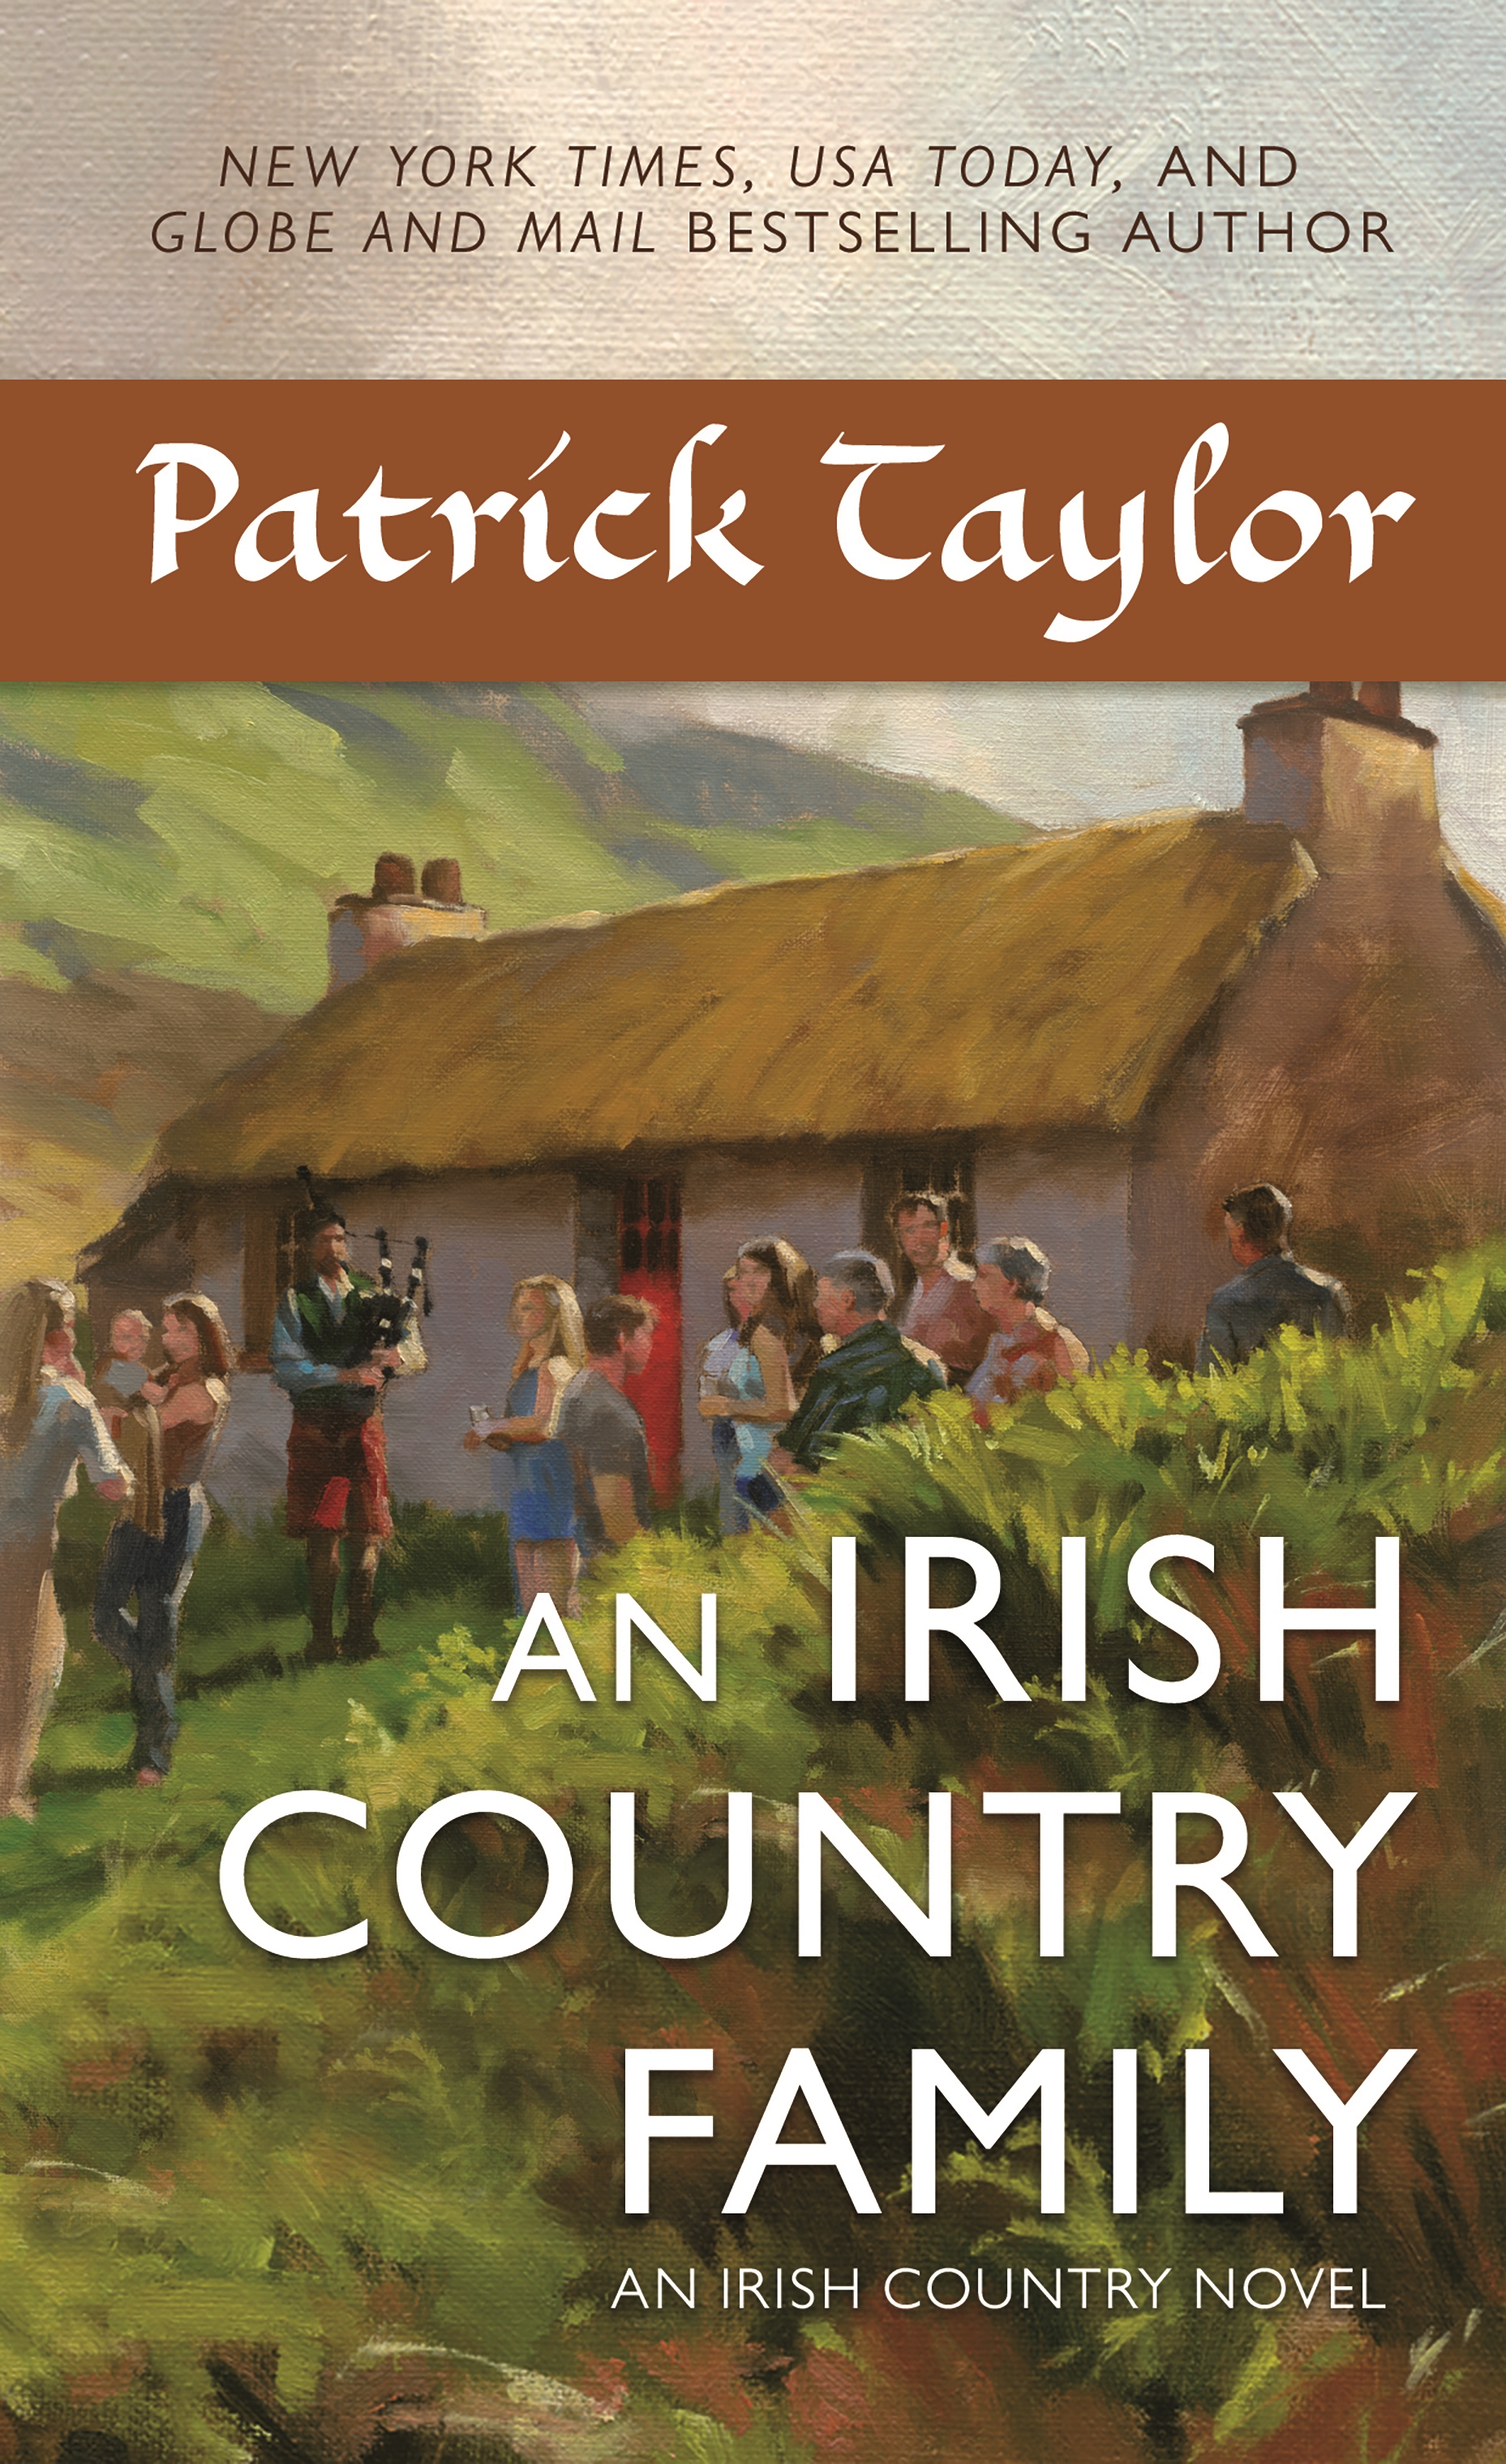 An Irish Country Family : An Irish Country Novel by Patrick Taylor